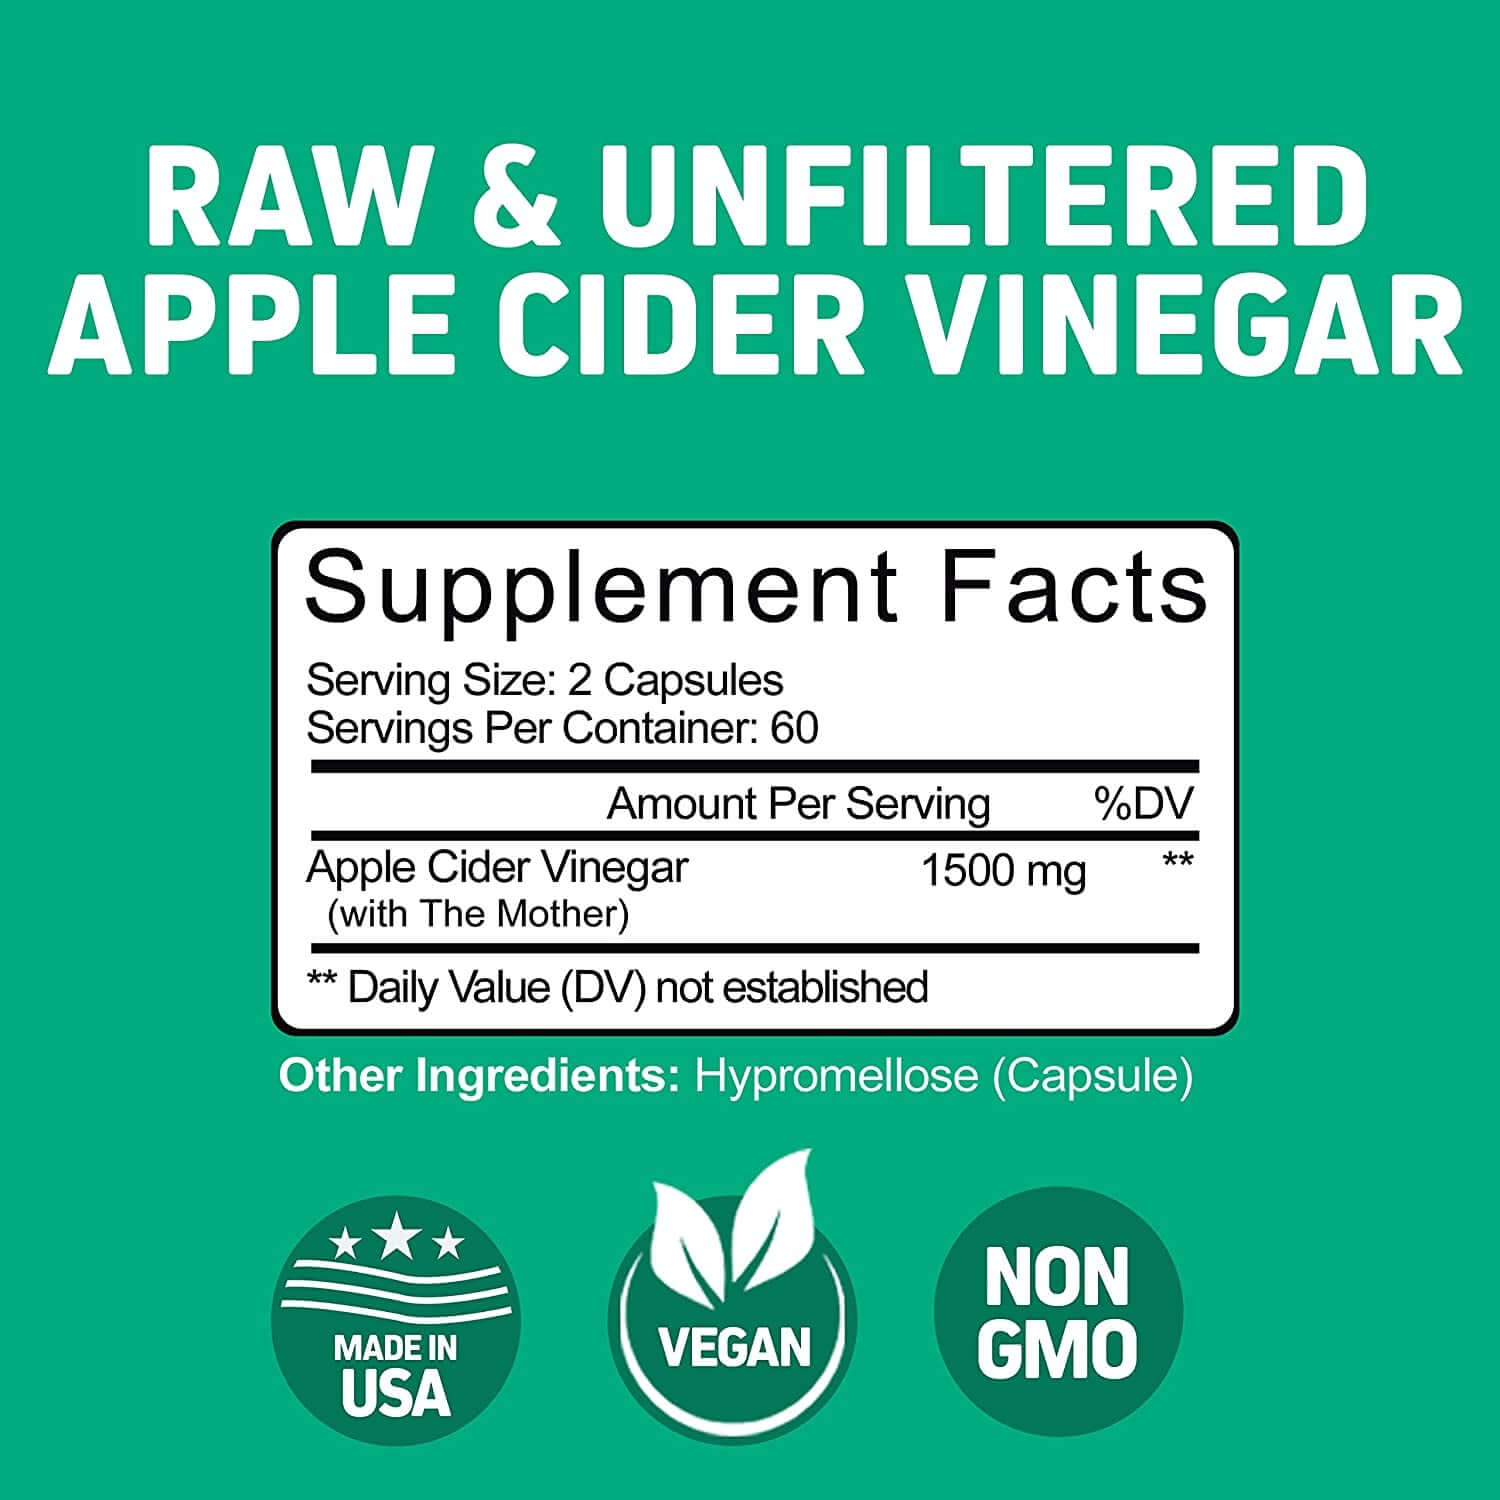 Herbtonics Raw Apple Cider Vinegar Capsules, 1500Mg Detox Support (120 Count (Pack of 2)) - vitamenstore.com